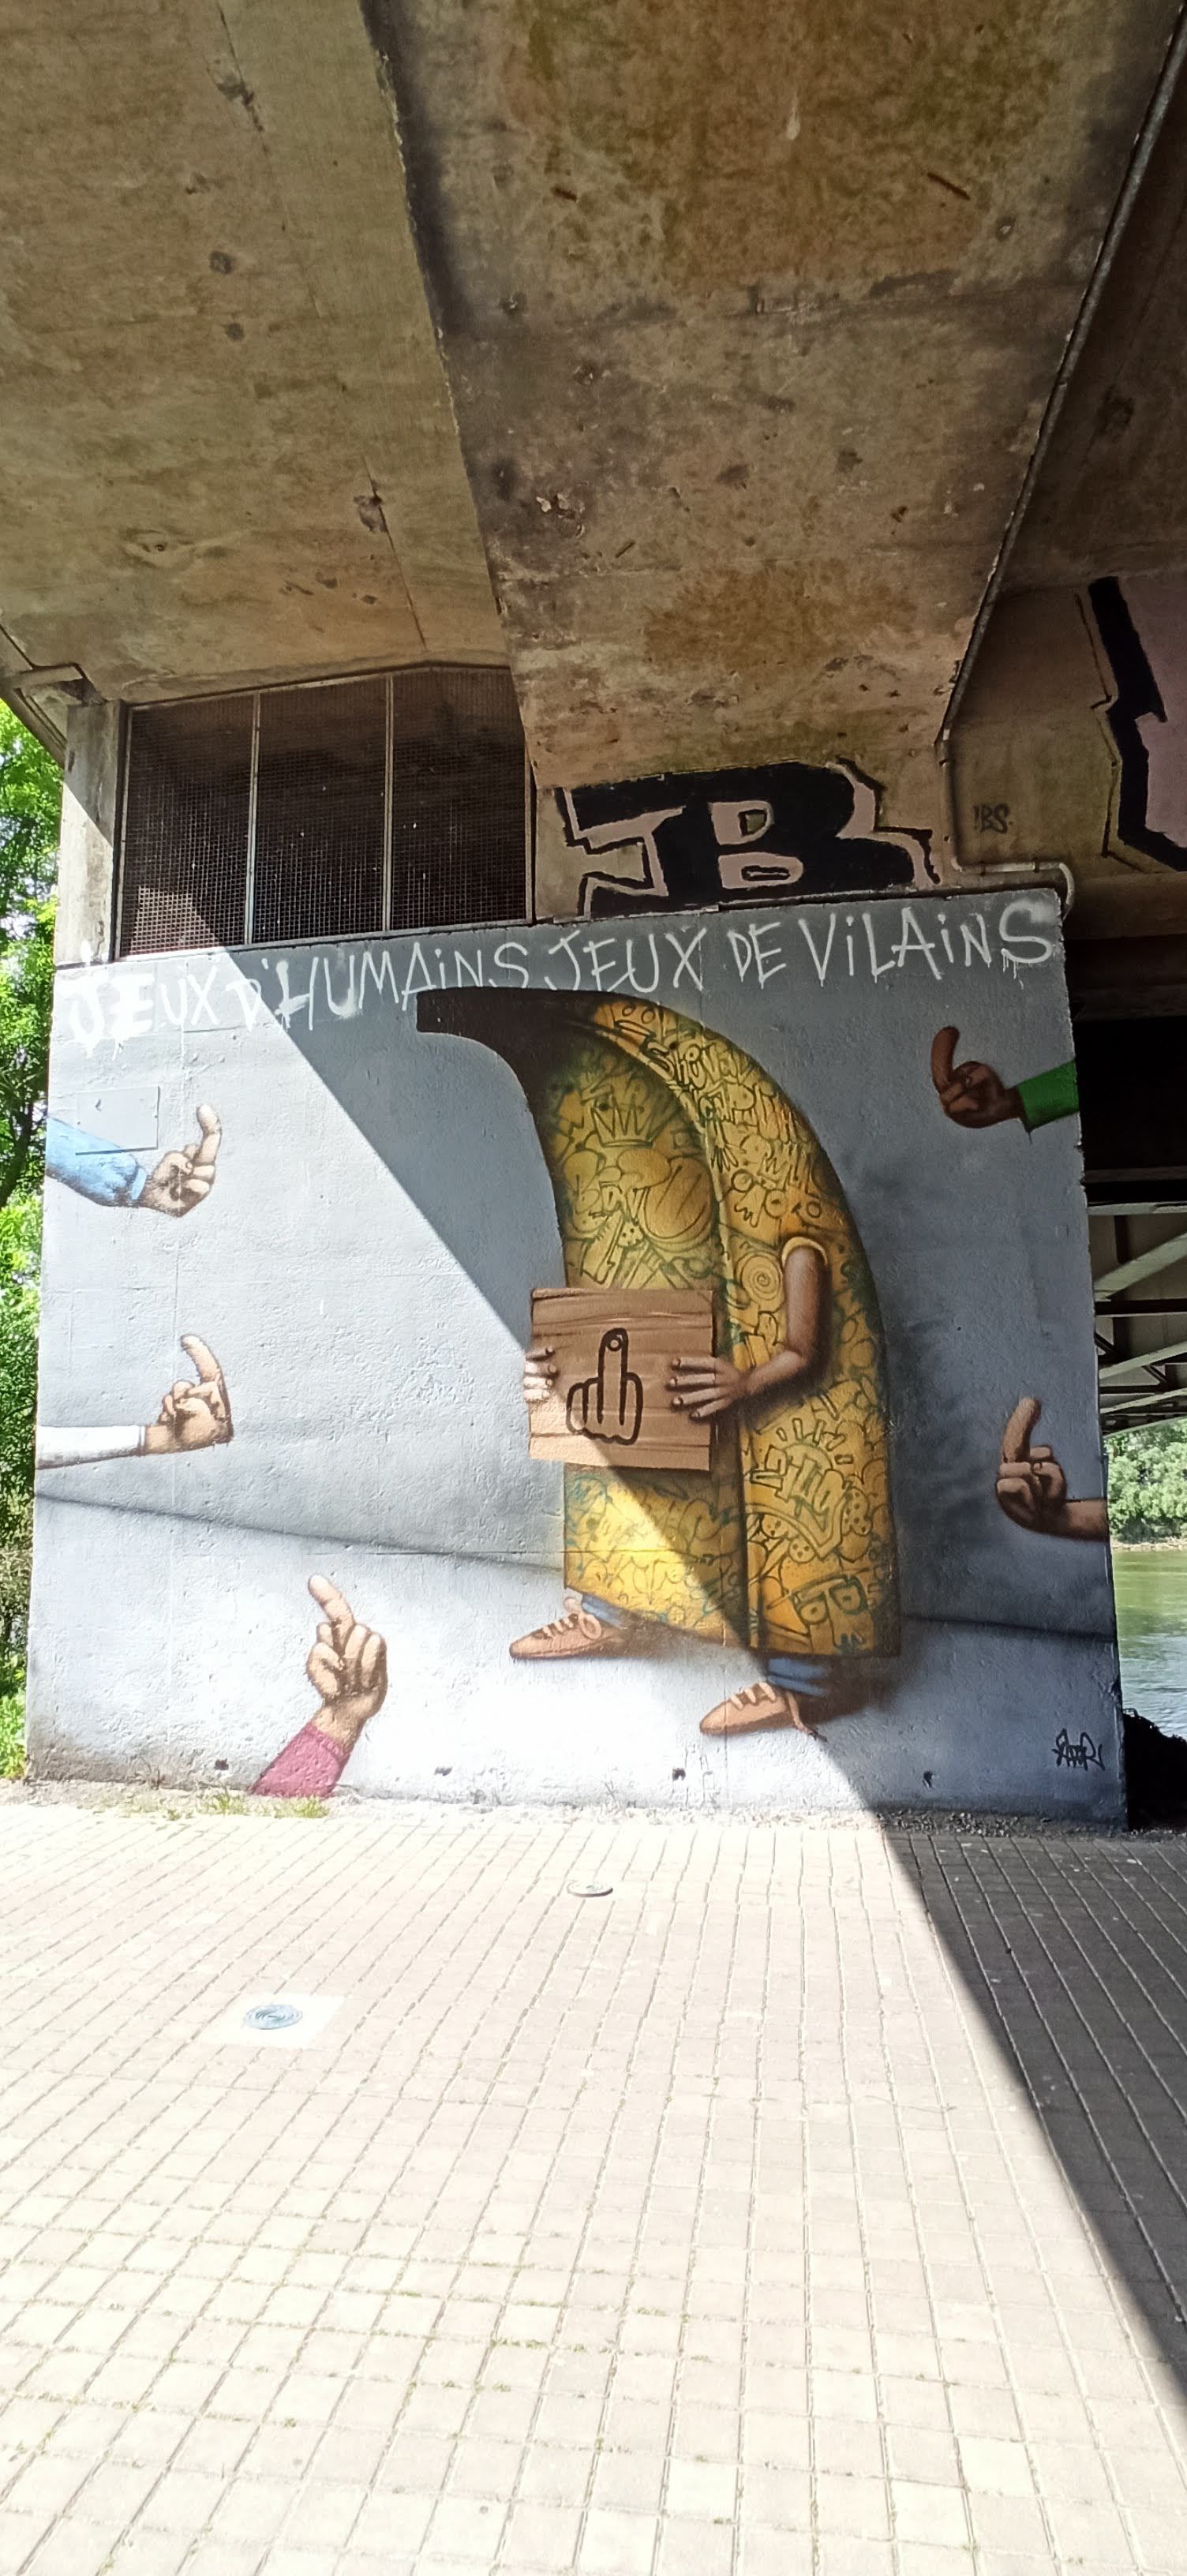 Graffiti 5055 Jeux d'humains jeux de vilains by the artist Ador captured by Rabot in Nantes France